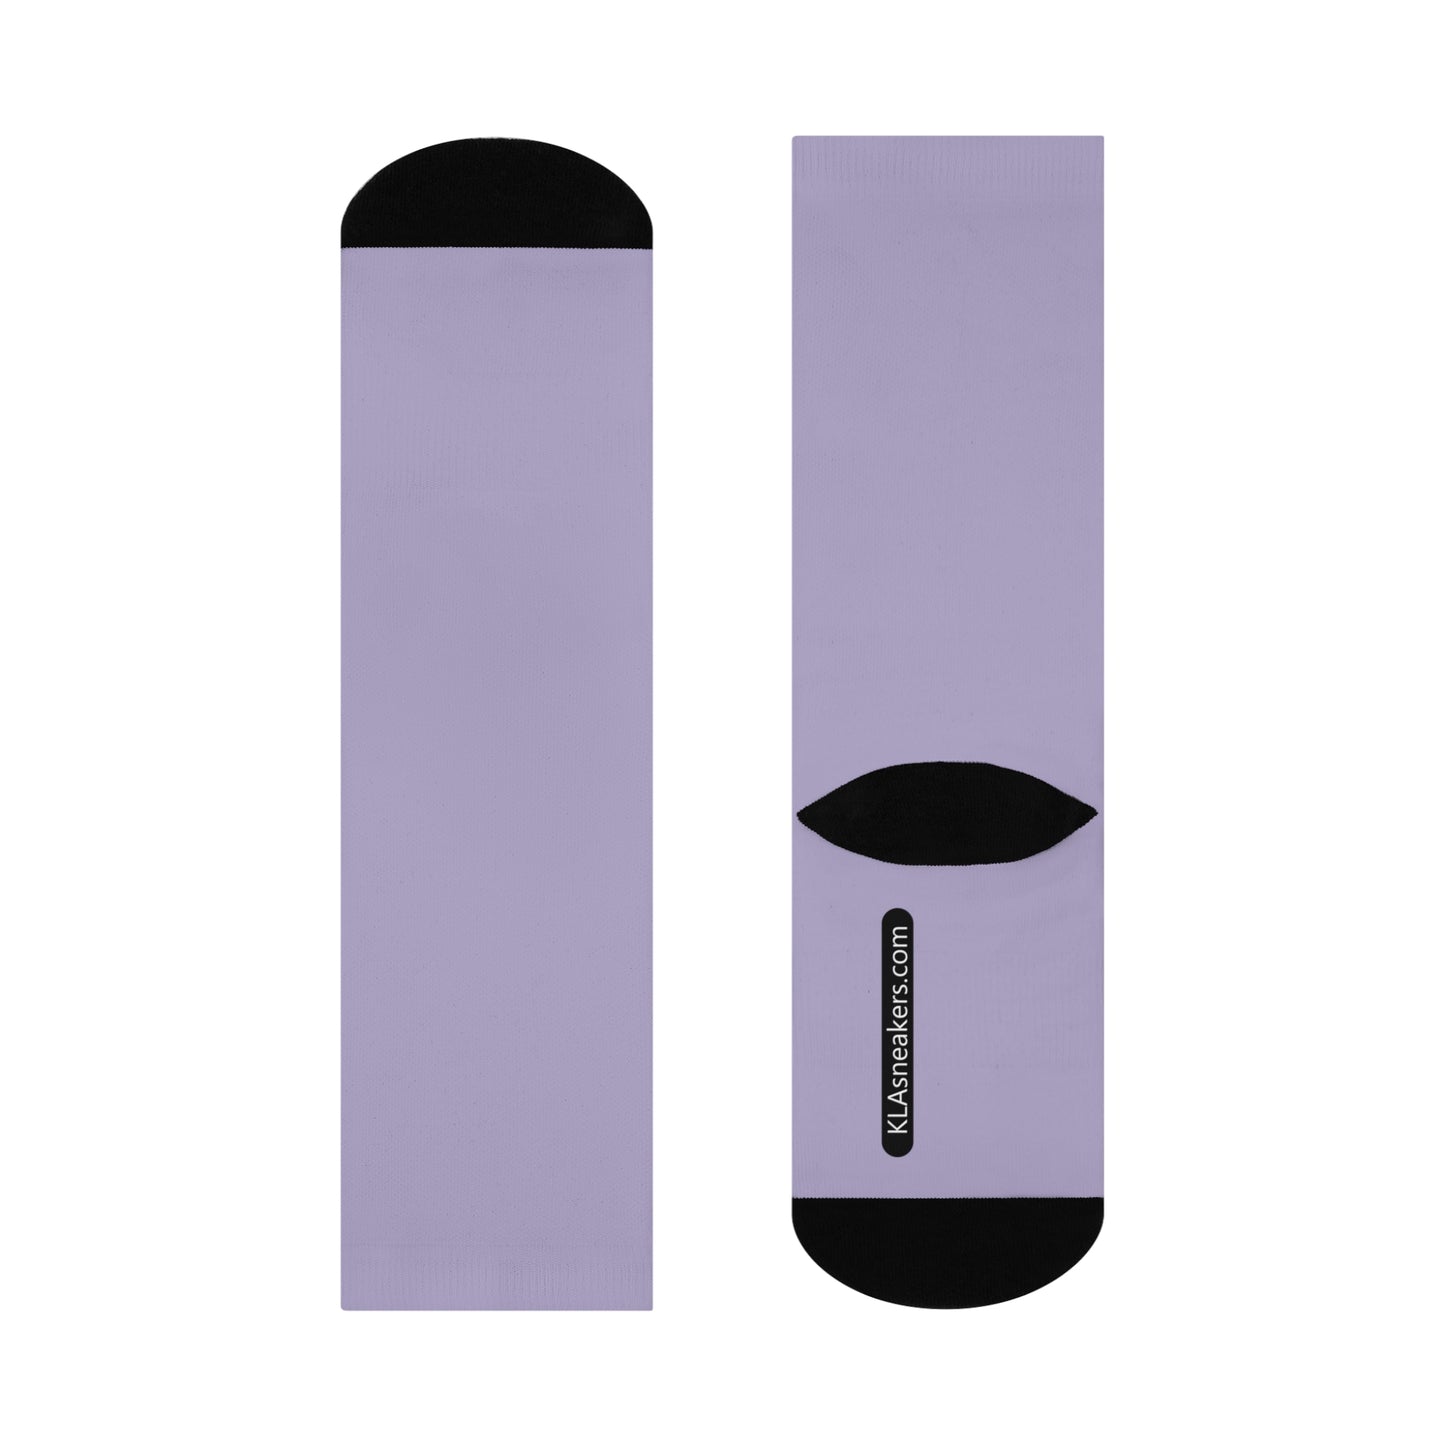 Unisex Crew Socks - Light Purple White One size 3/4 Crew